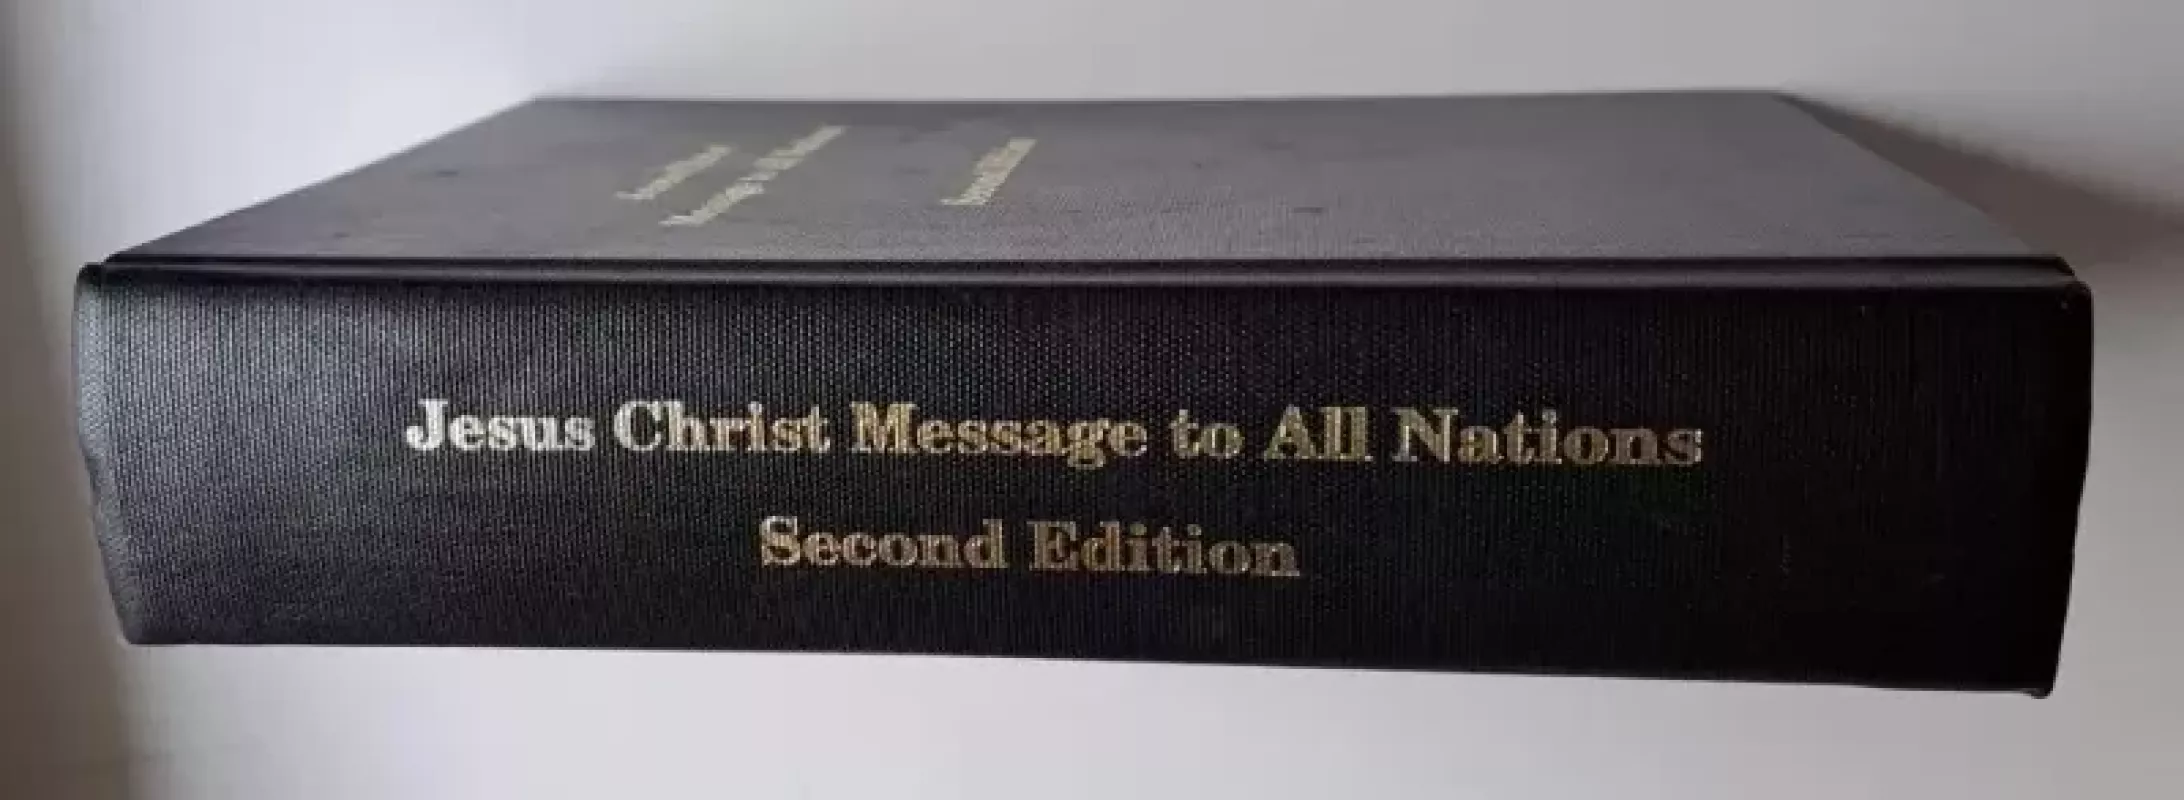 Jesus Christ Message to All Nations Second Edition - Warren Jeffs, knyga 4